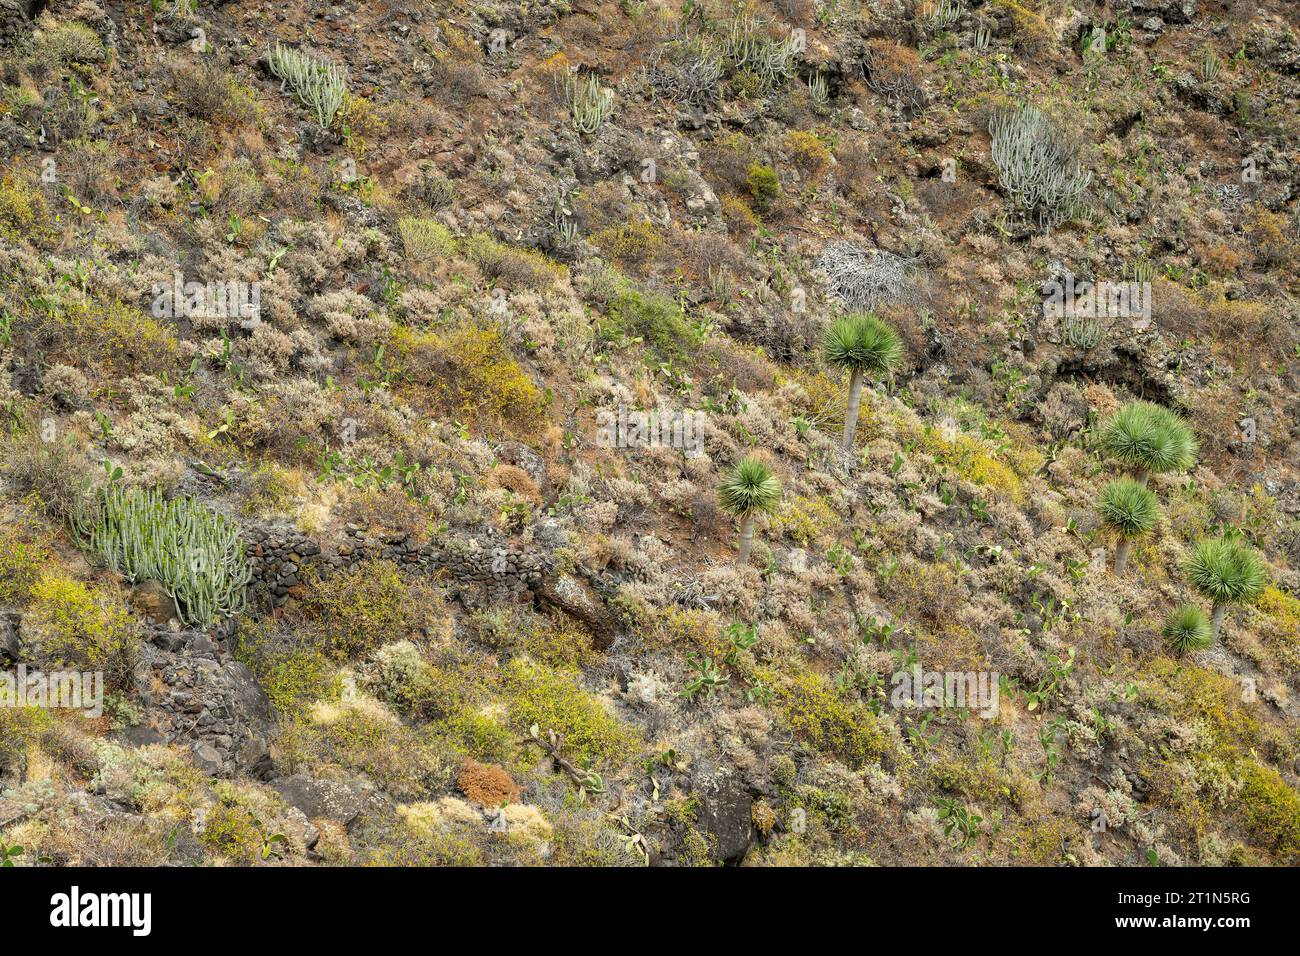 Cliff near Punta de Hidalga, Anaga, Tenerife, with abundant native vegetation including numerous dragon trees (Dracaena draco) Stock Photo